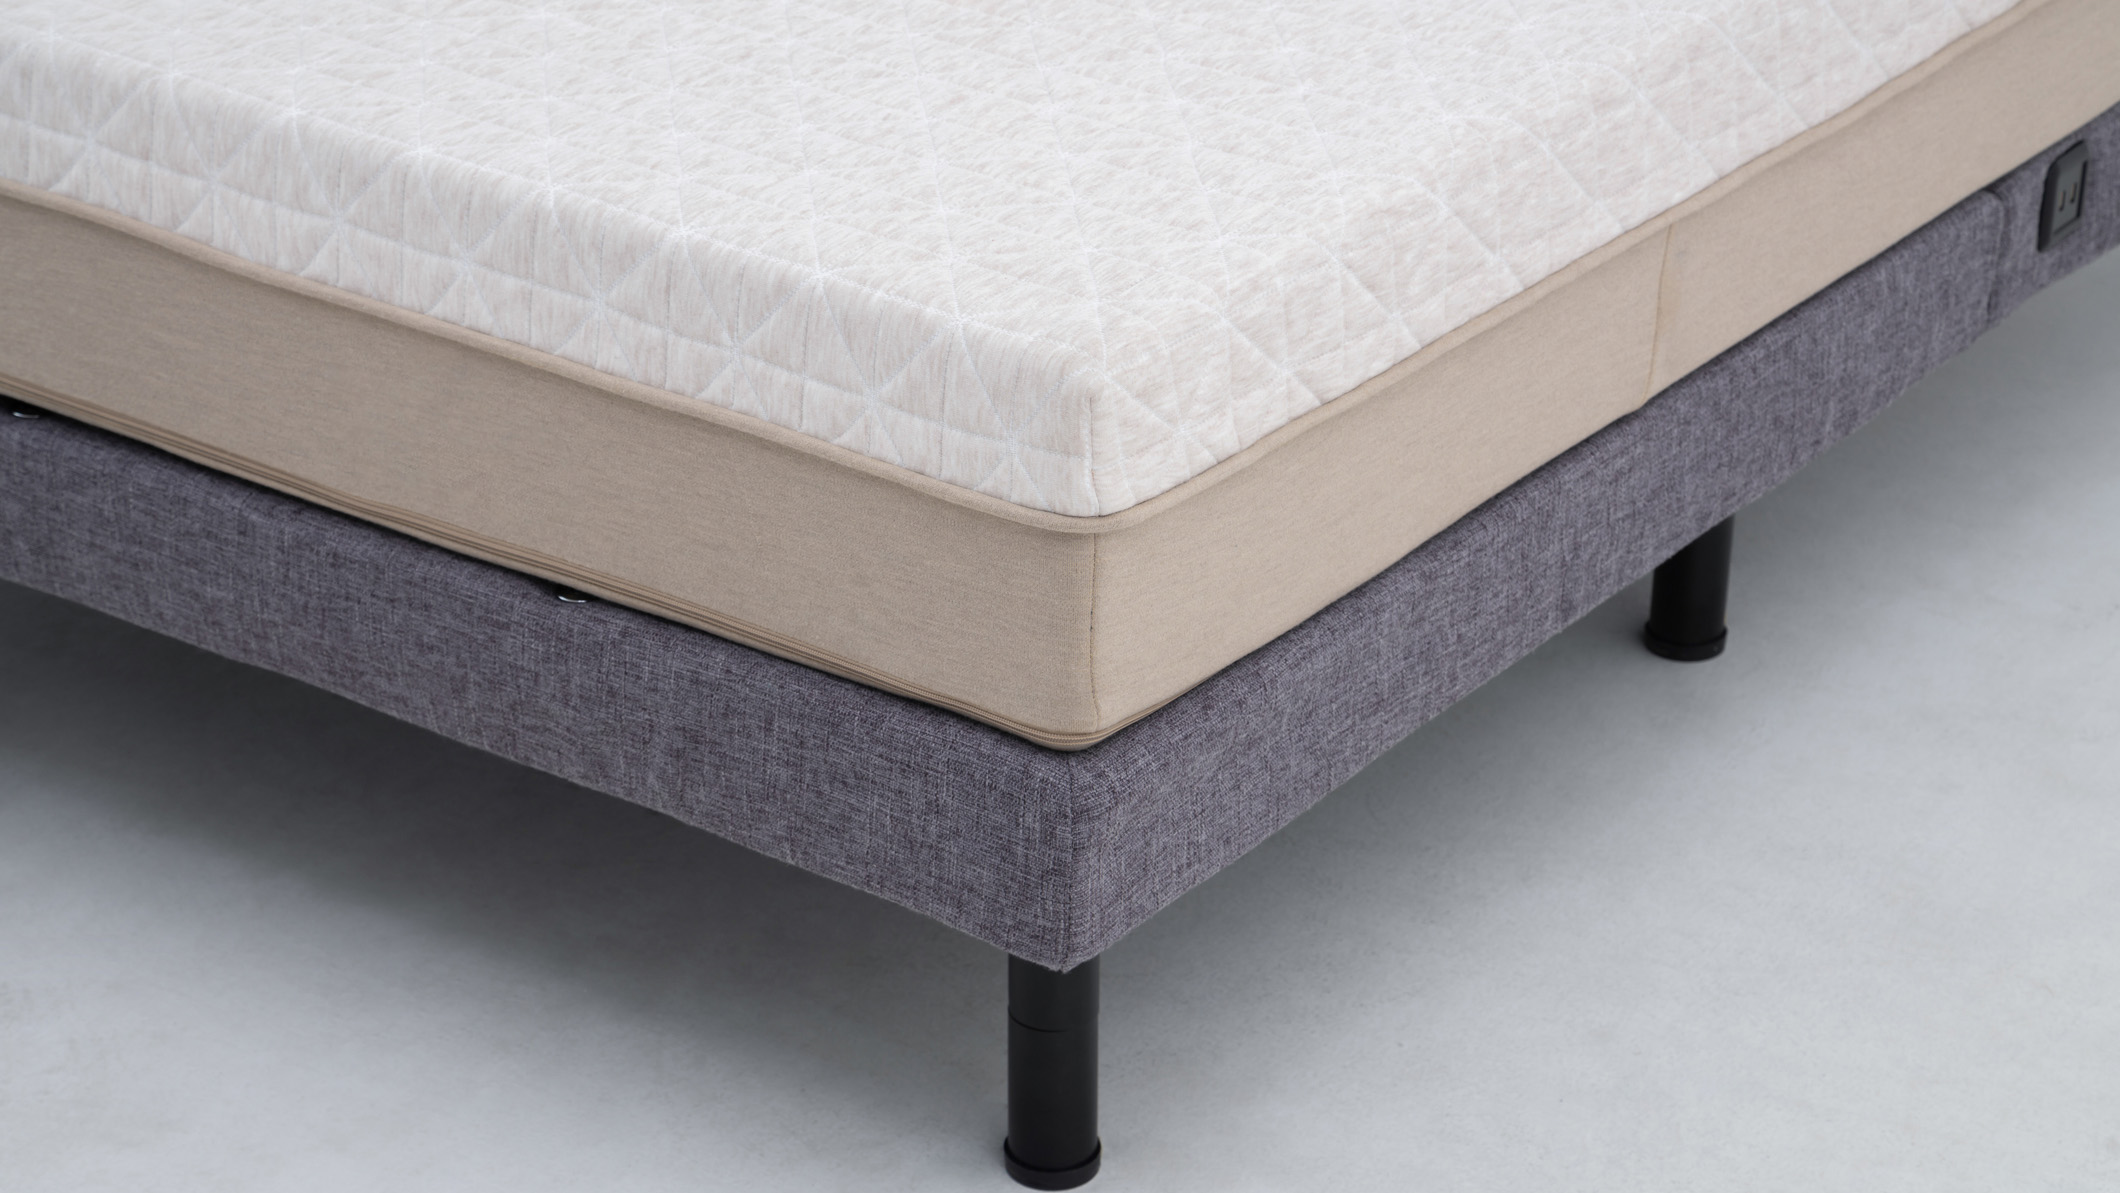 A corner of a mattress on a grey box spring